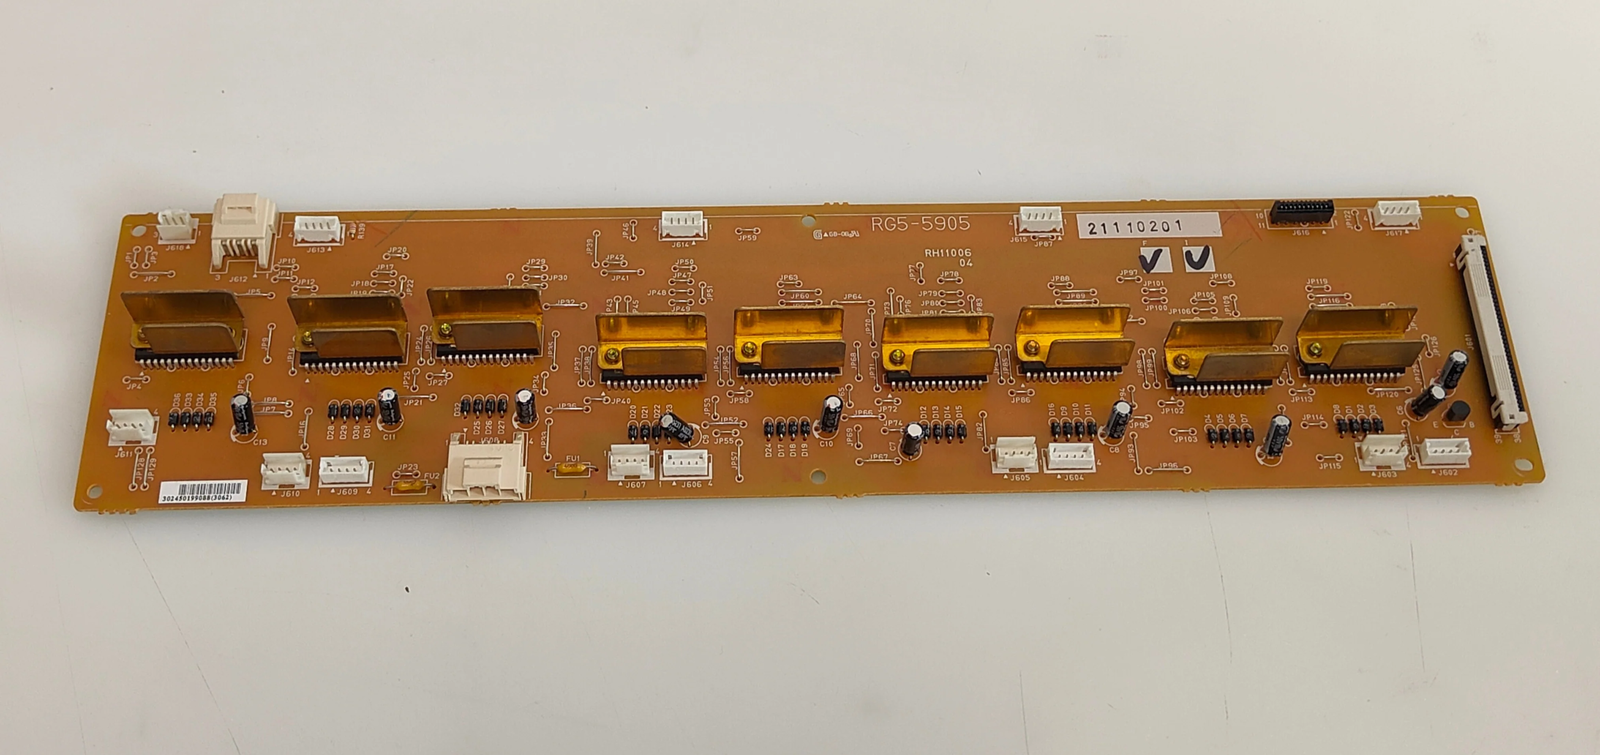 HP Color LaserJet 9500n Printer - Process cartridge PC Board RG5-5905